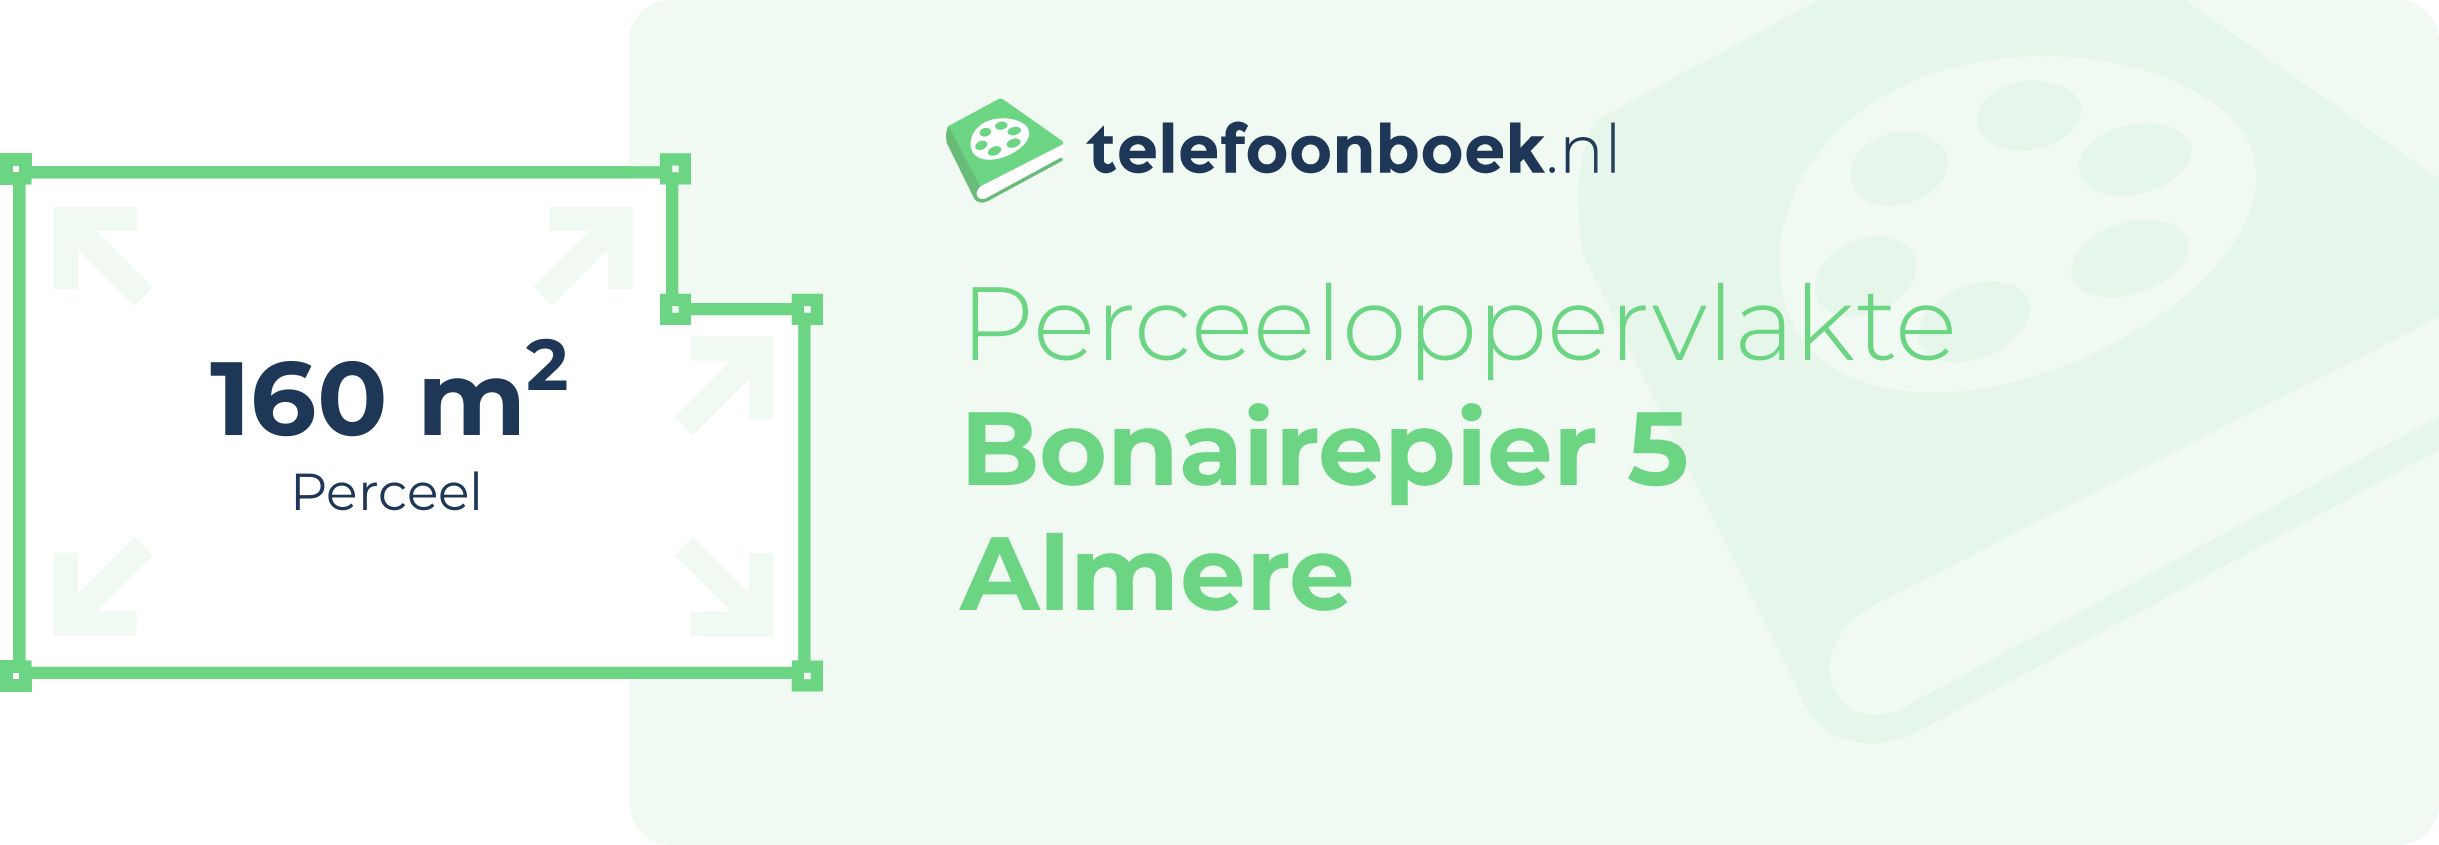 Perceeloppervlakte Bonairepier 5 Almere